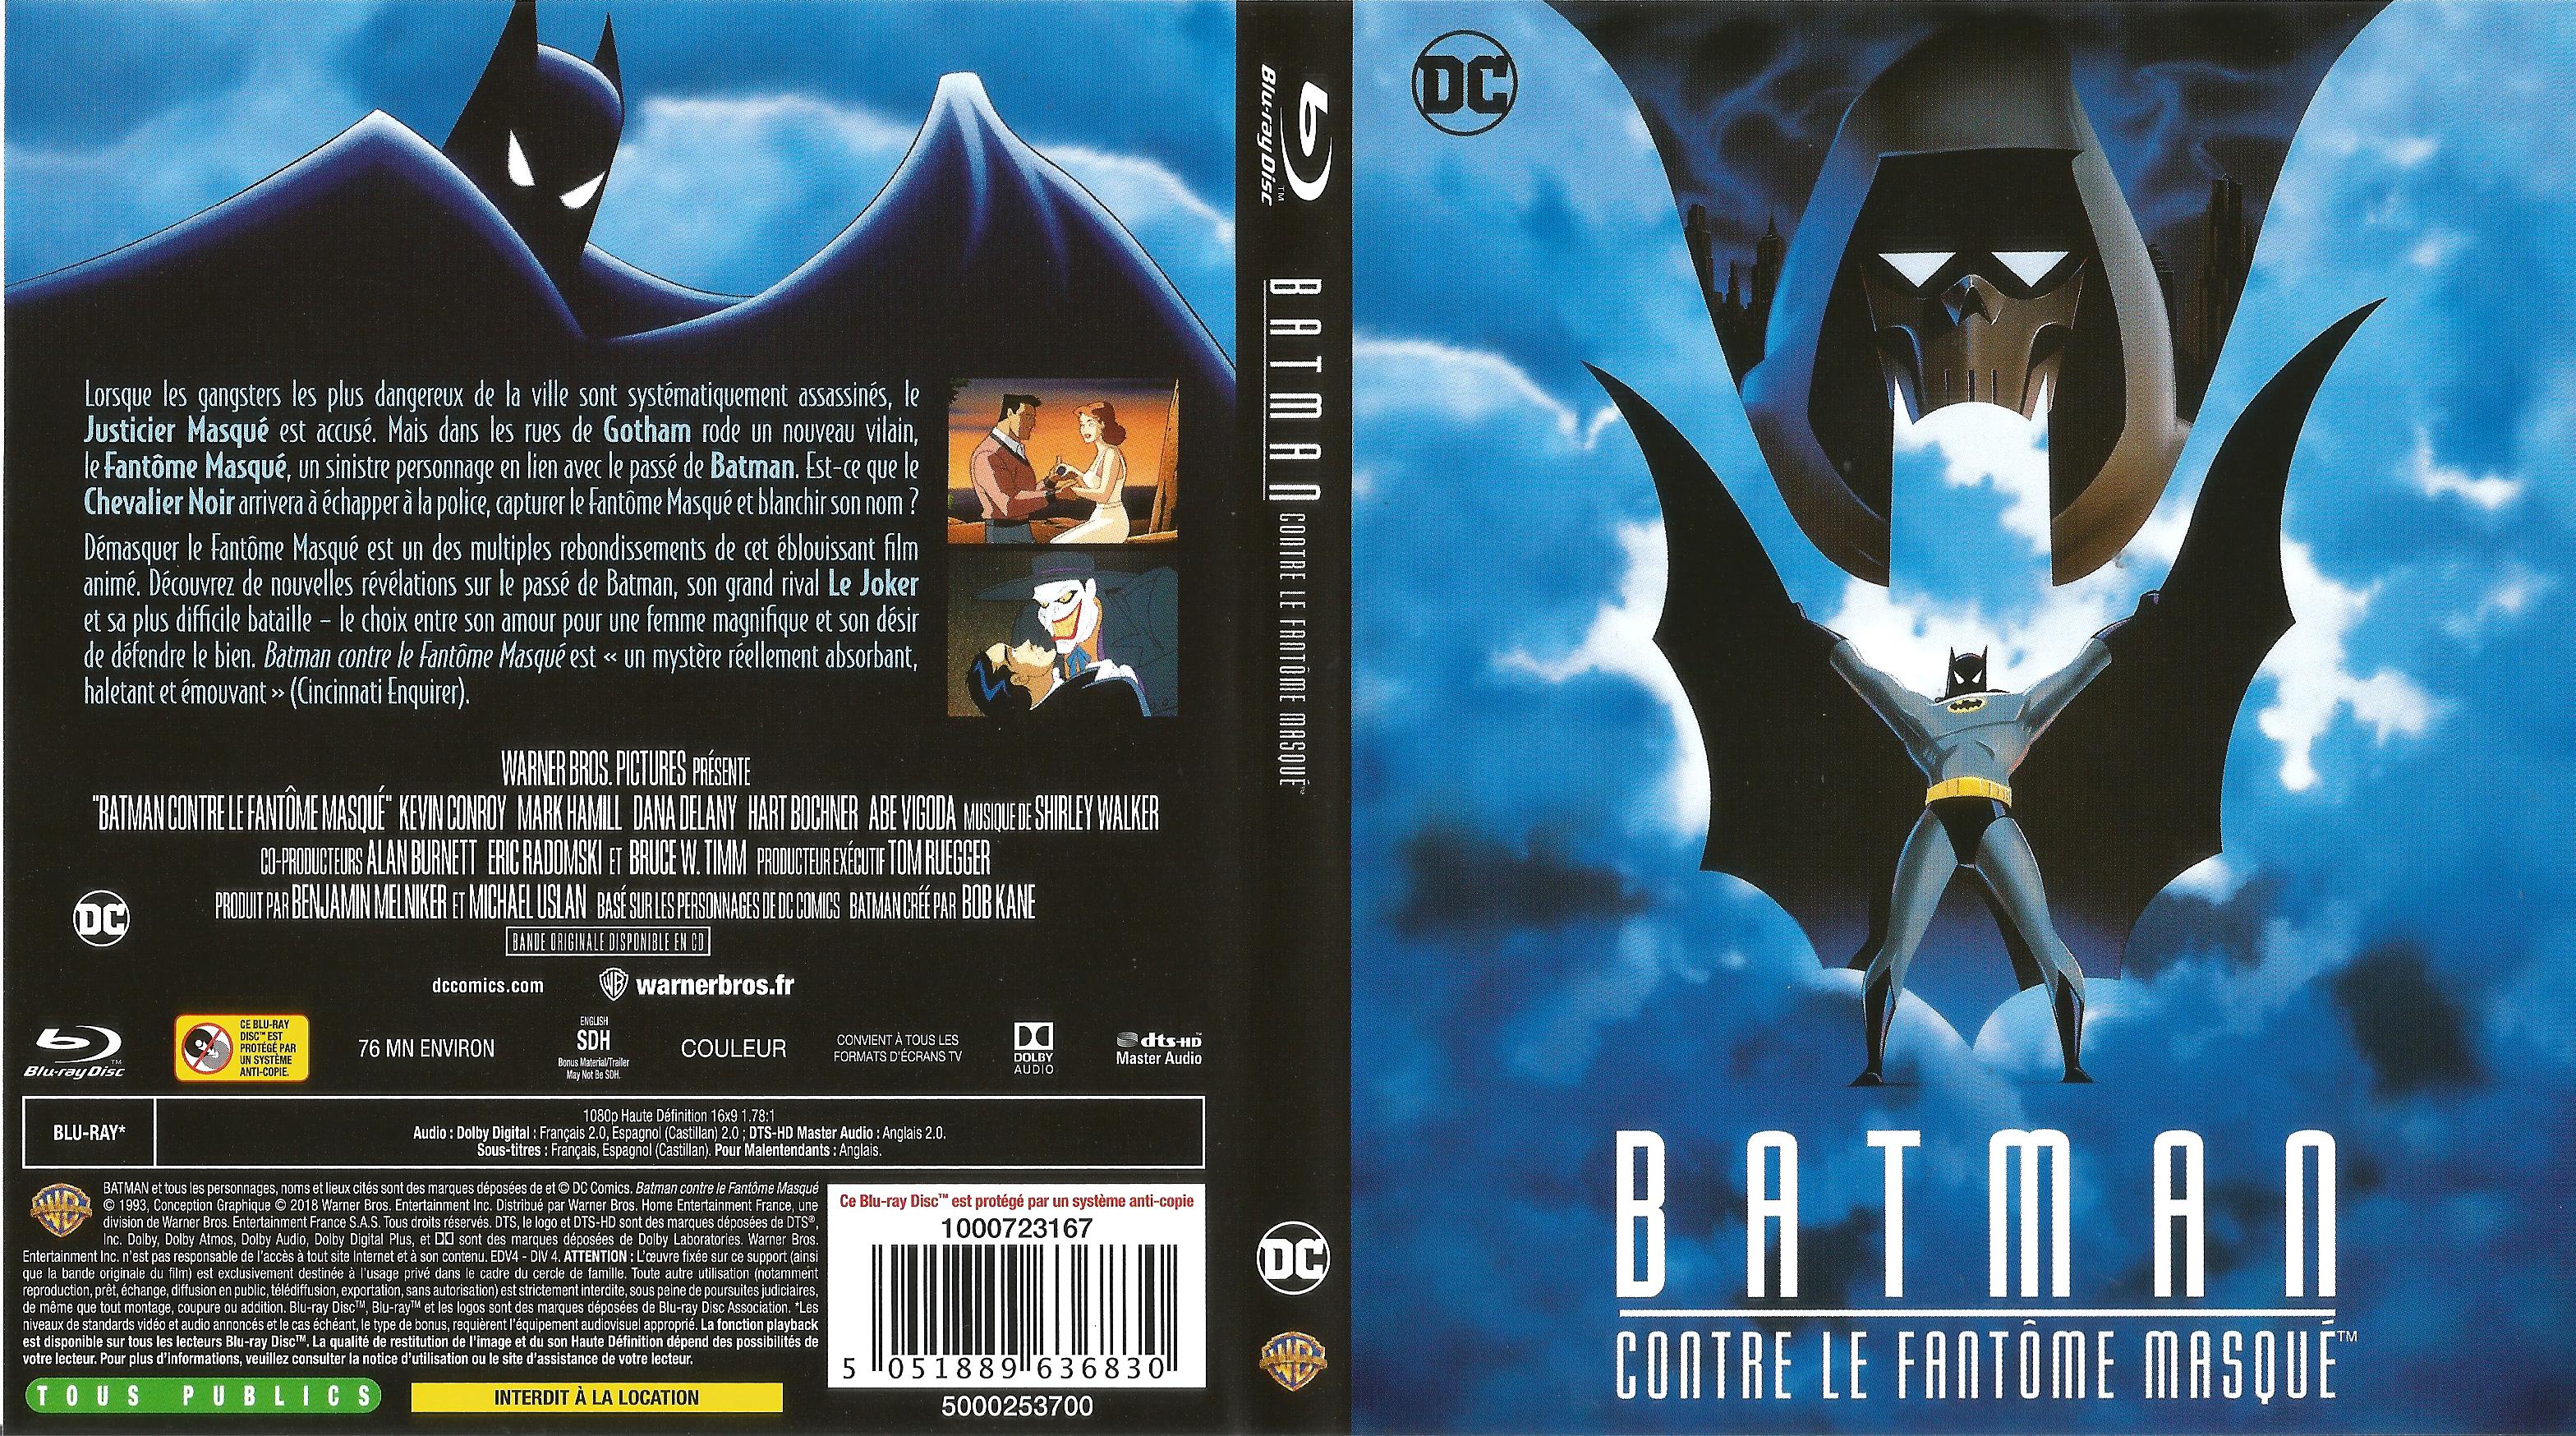 Jaquette DVD Batman contre le fantome masqu (BLU-RAY)